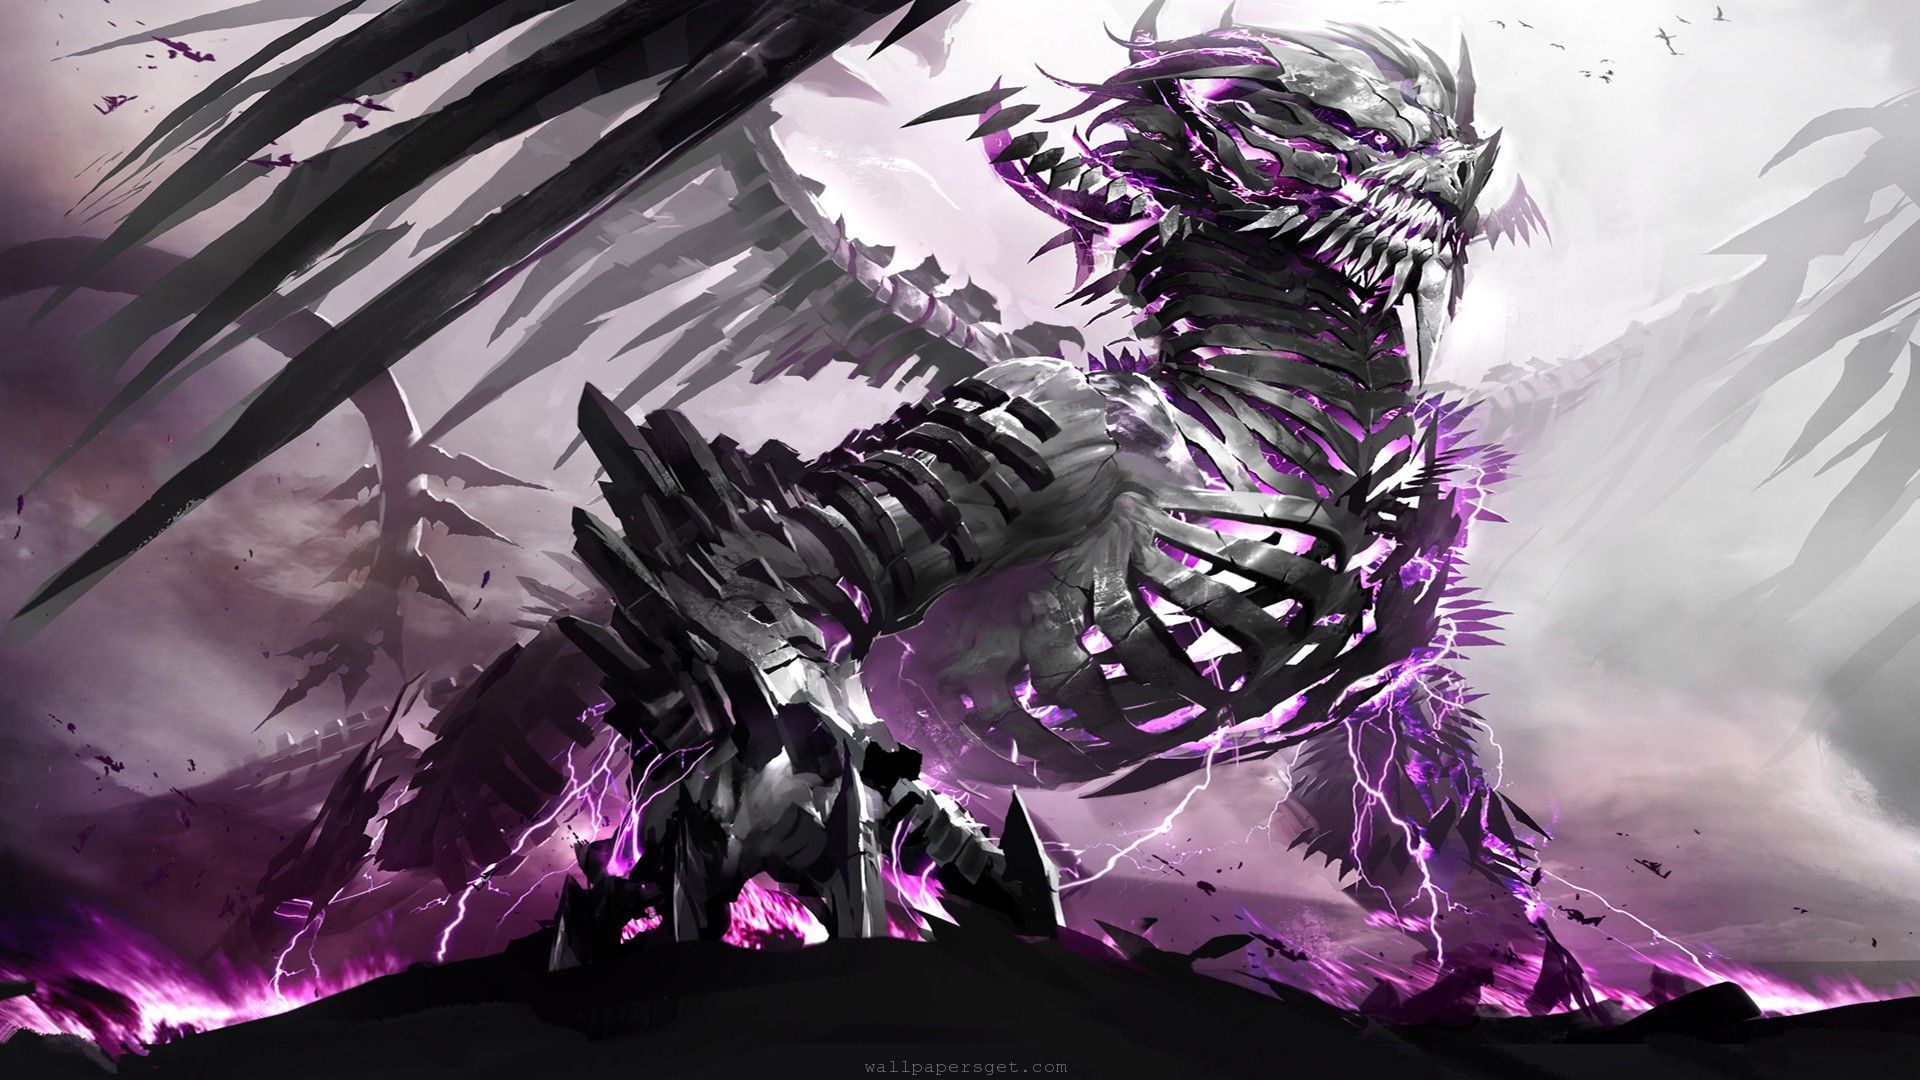 Gallery for - desktop wallpaper dragons hd